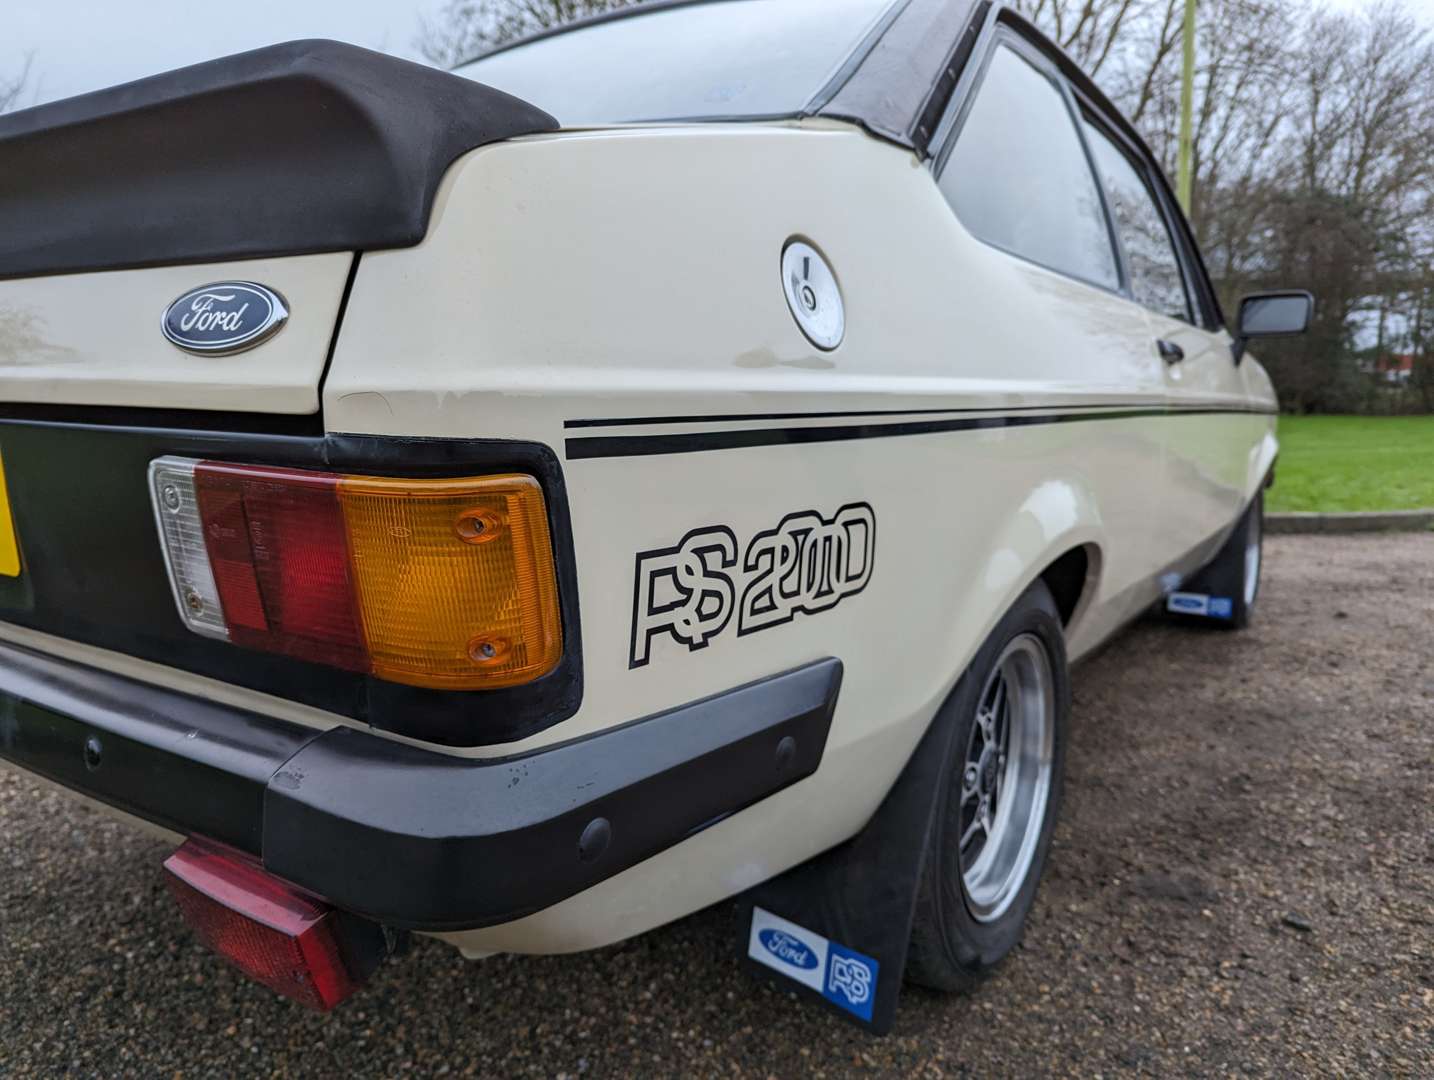 <p>1980 FORD ESCORT RS 2000 CUSTOM</p>